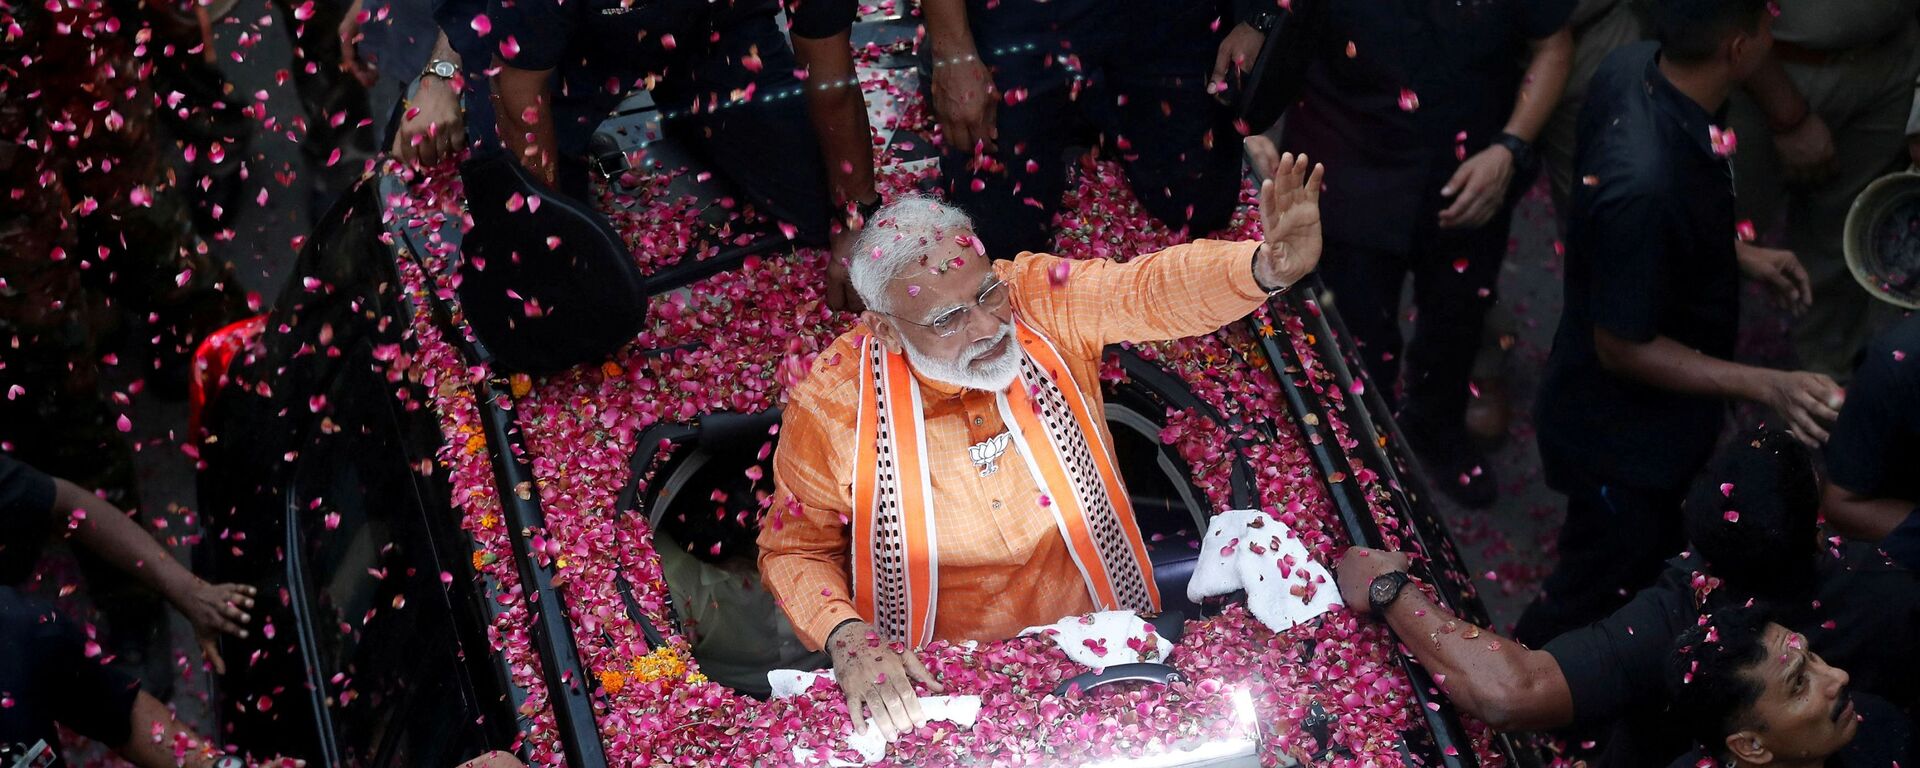 India's Prime Minister Narendra Modi waves towards his supporters during a roadshow in Varanasi, India, April 25, 2019 - Sputnik International, 1920, 06.12.2019